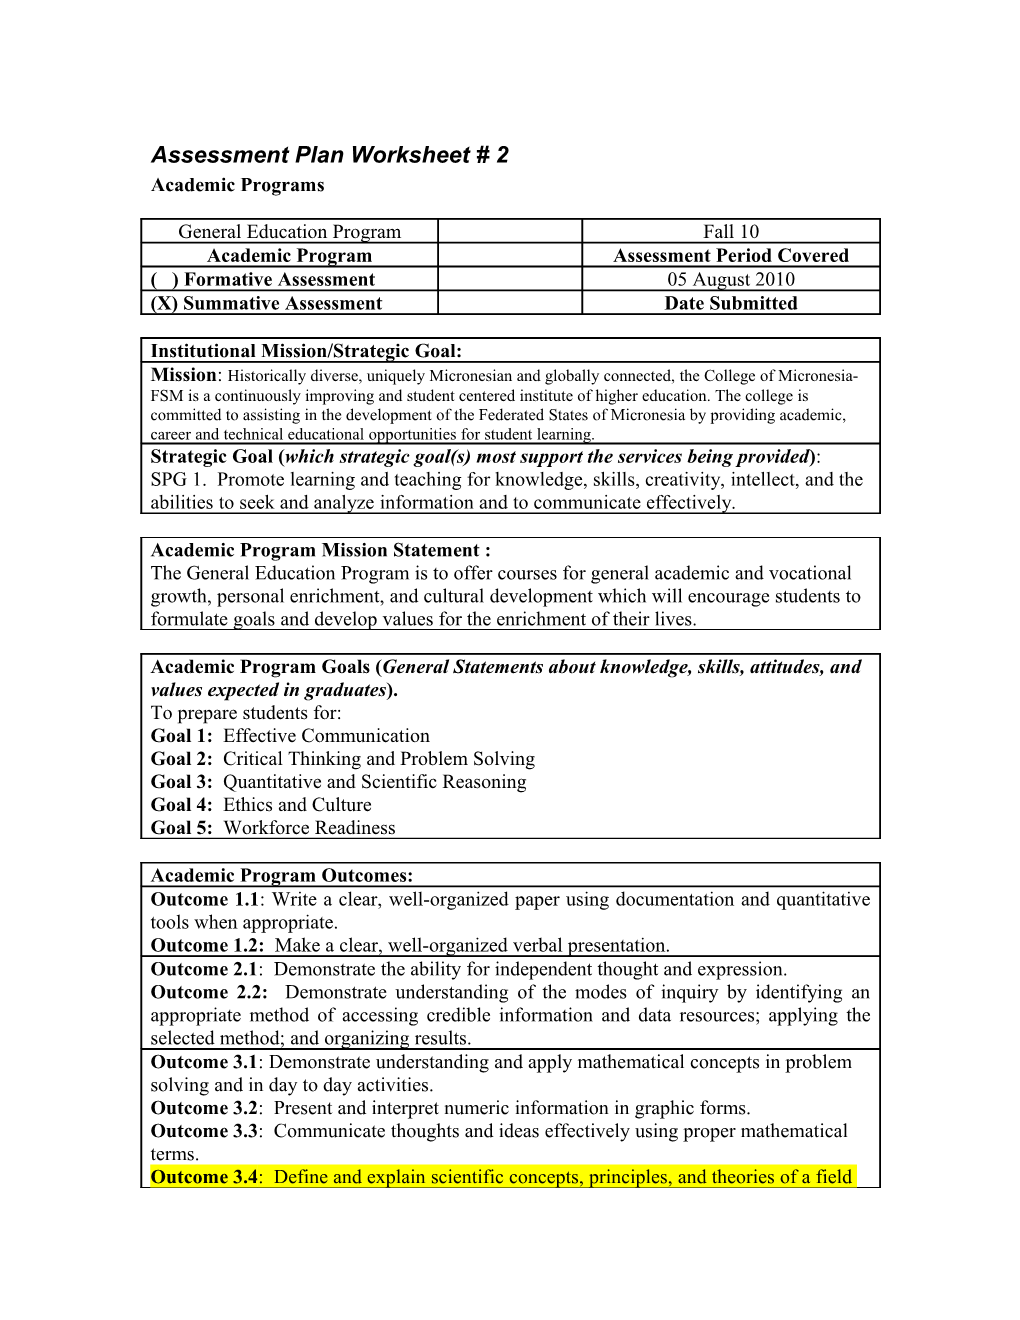 General Education Assesssment Science Worksheet 2